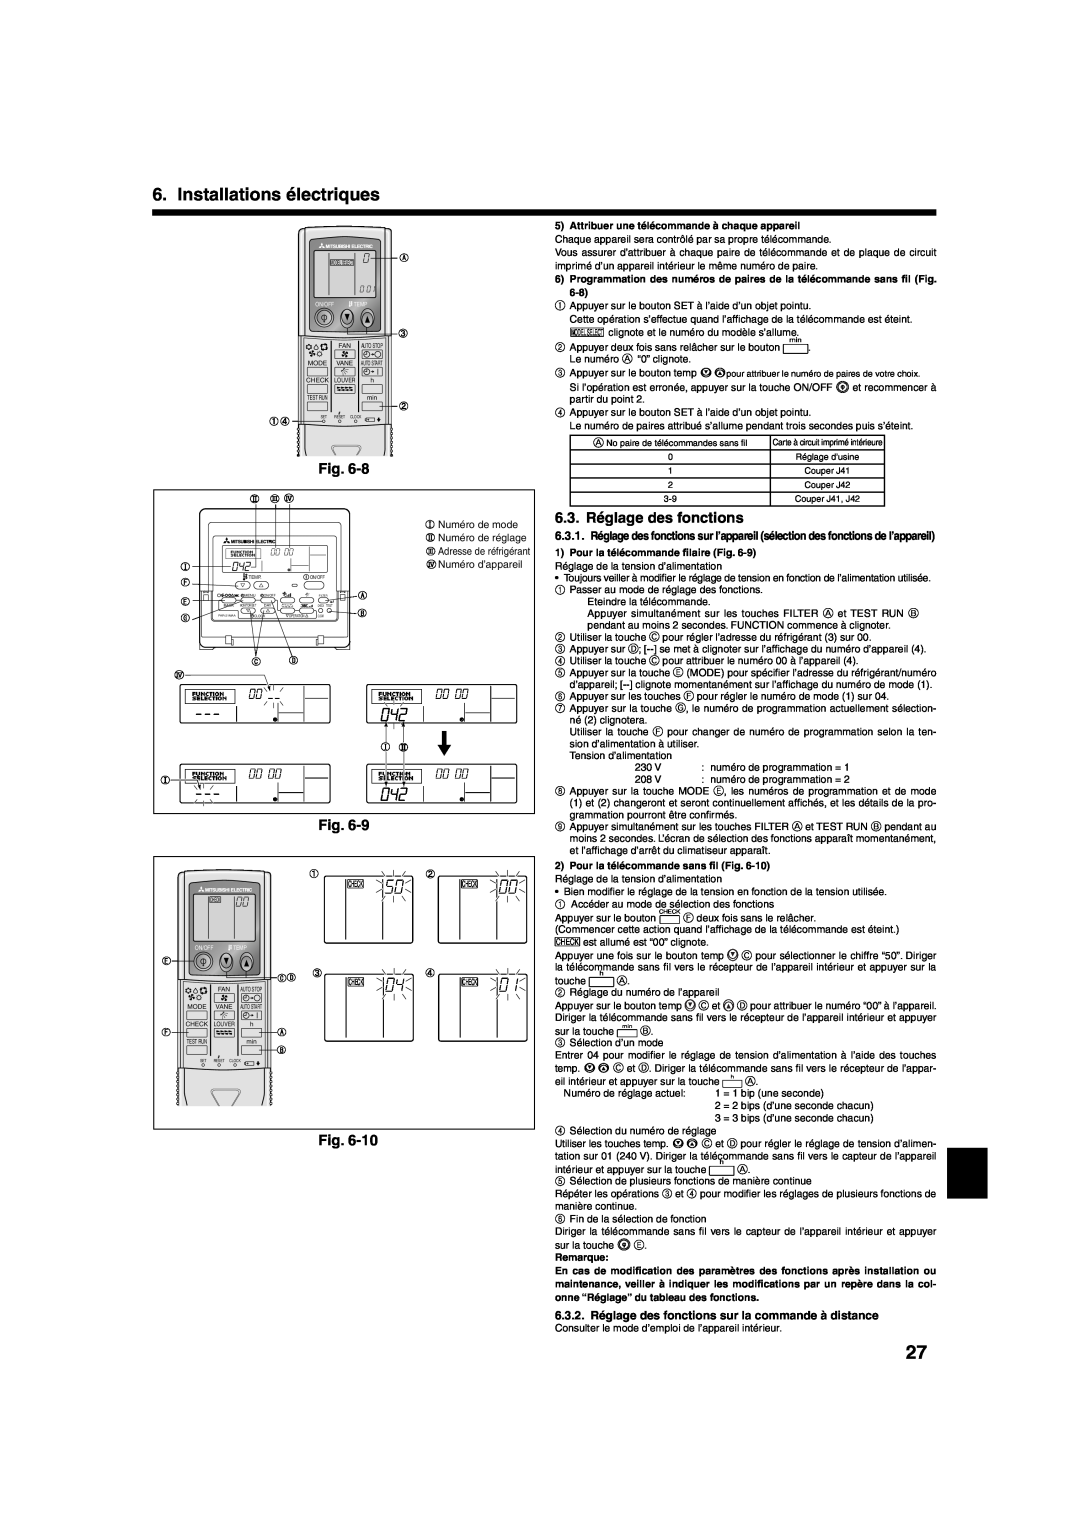 Mitsumi electronic PLA-ABA installation manual 6.3. Réglage des fonctions, Installations électriques 